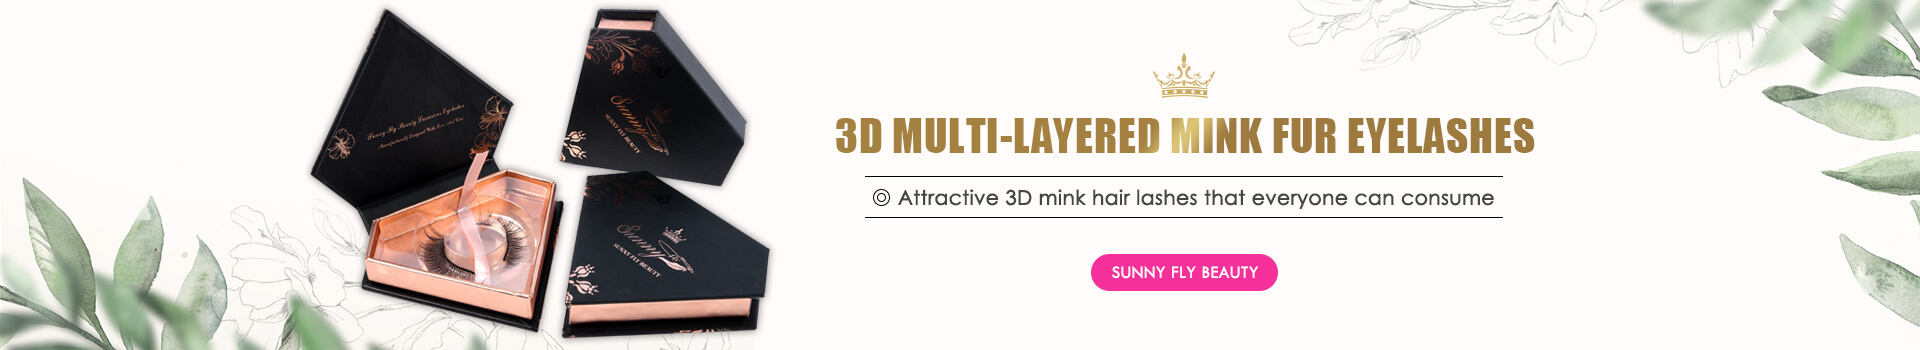 3D Multi-layered Mink Fur Eyelashes MG15